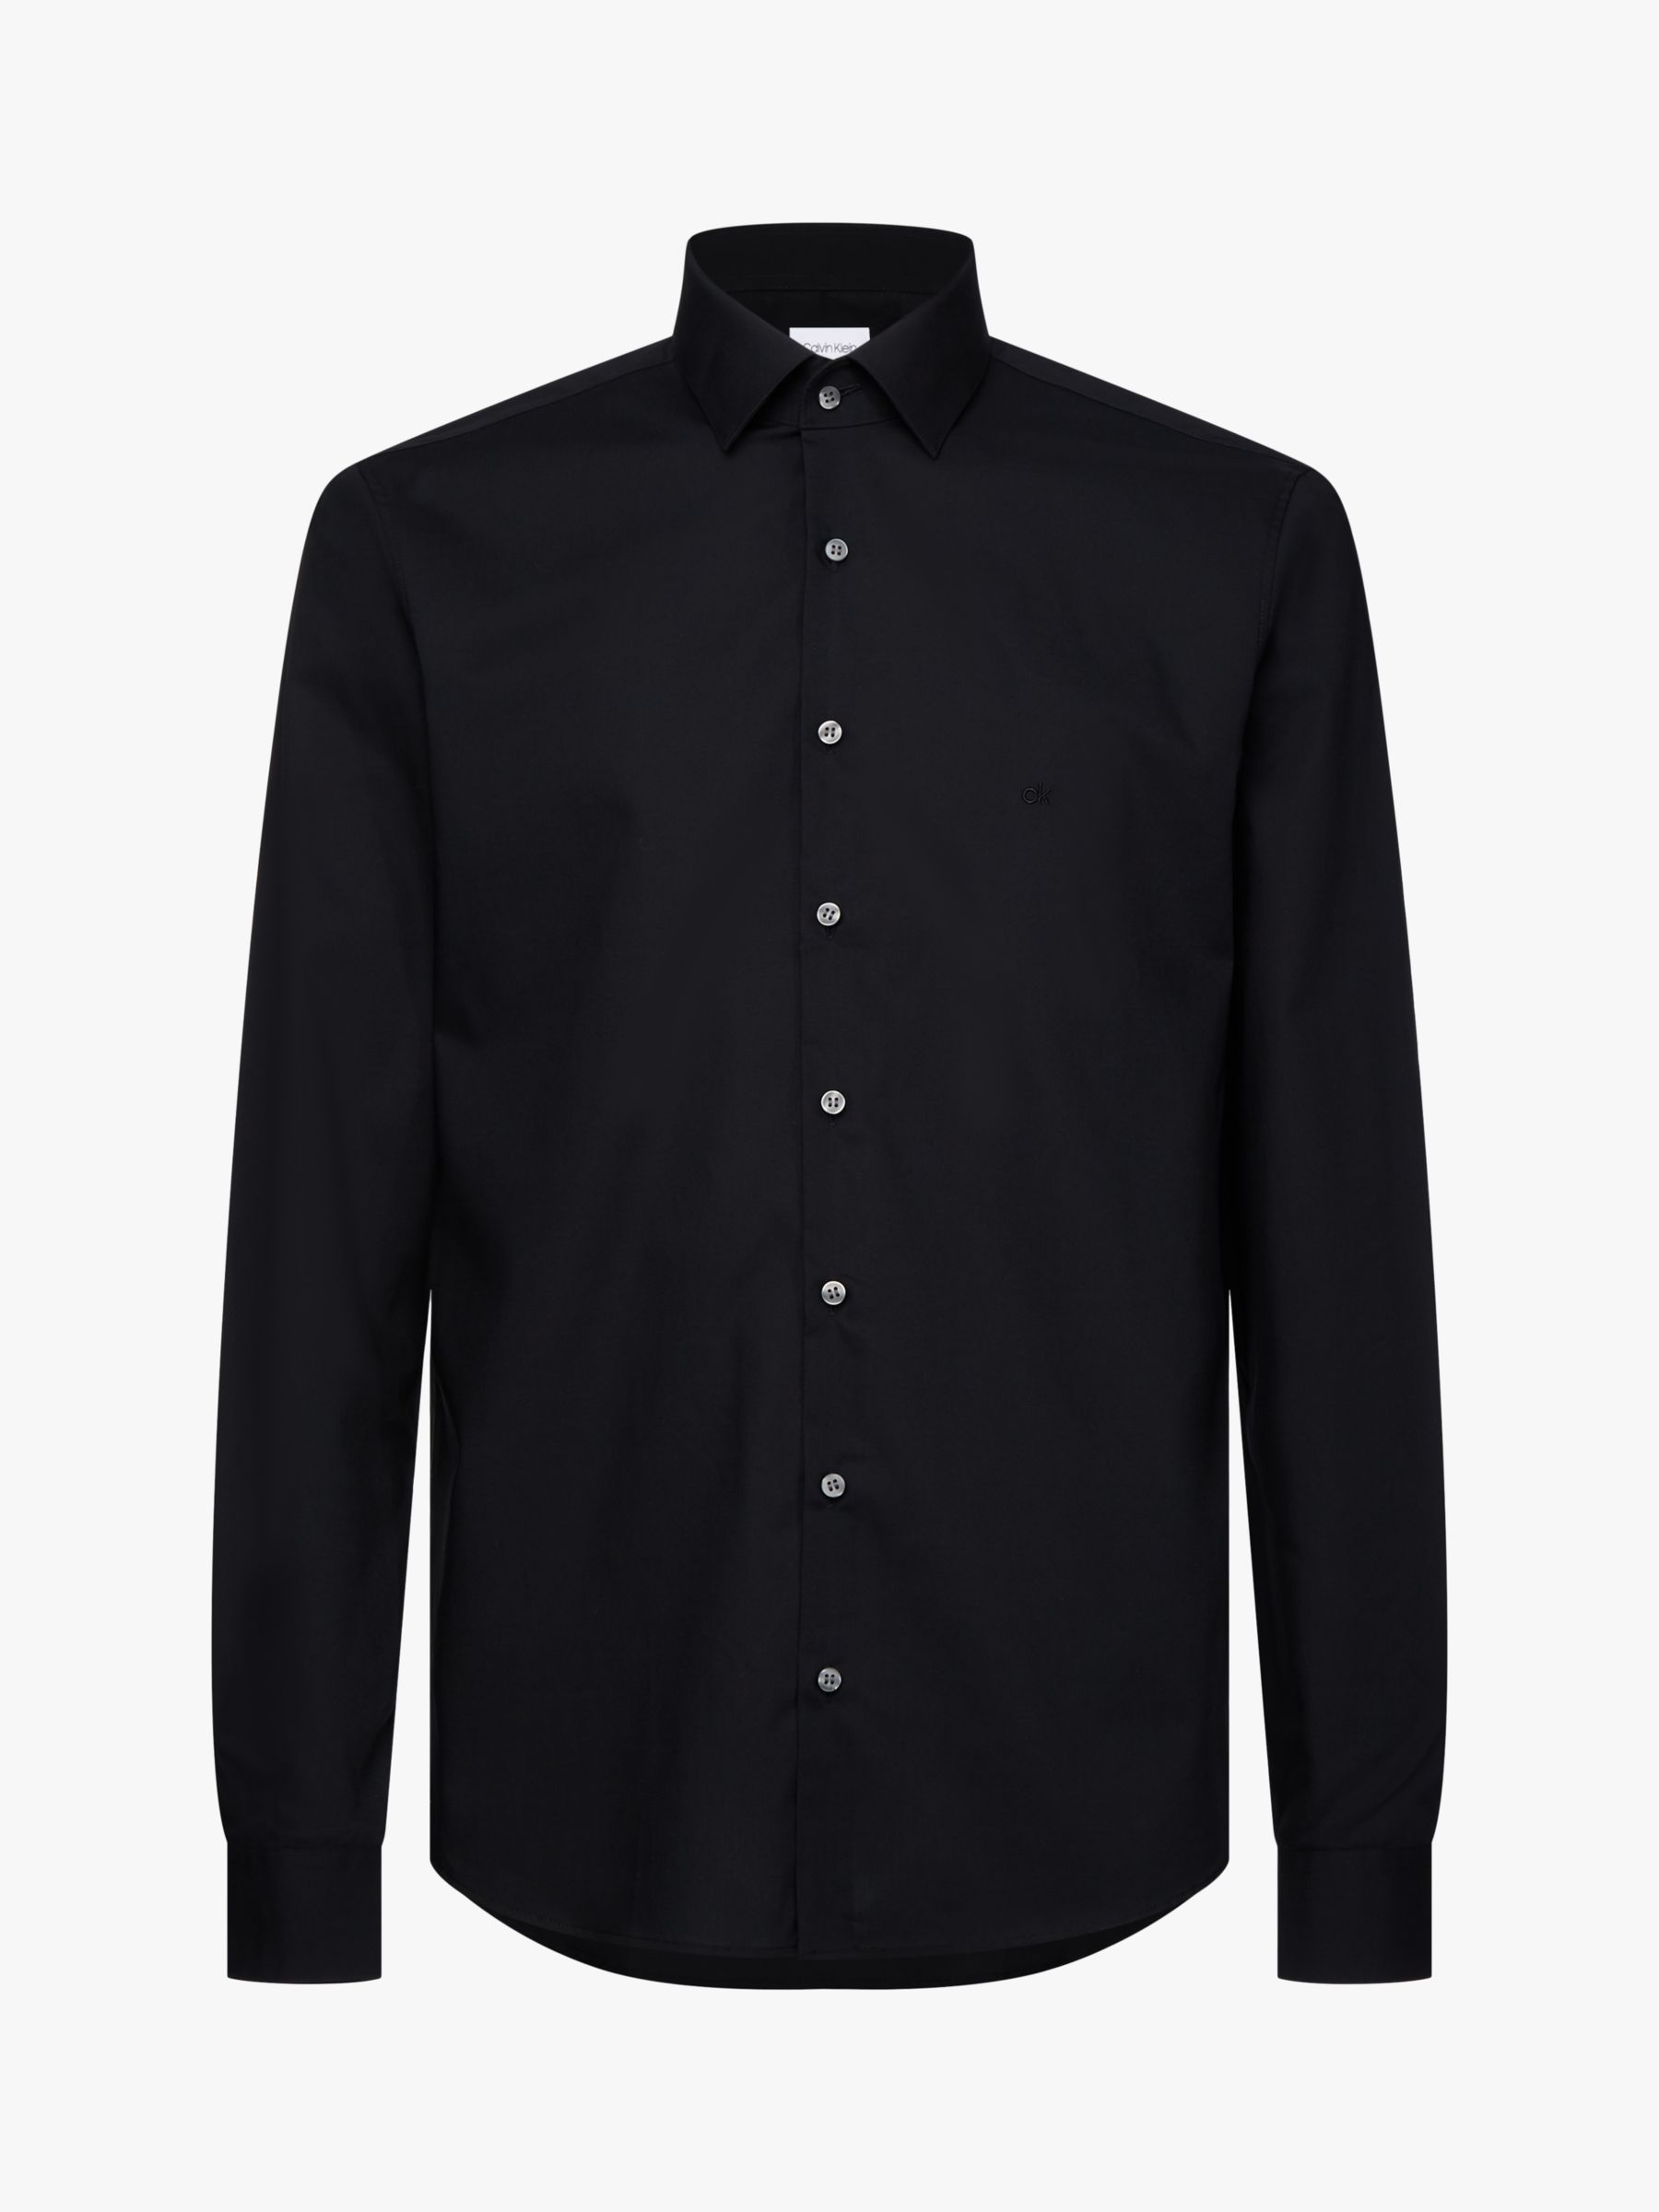 Calvin Klein Poplin Slim Fit Shirt, Black at John Lewis & Partners